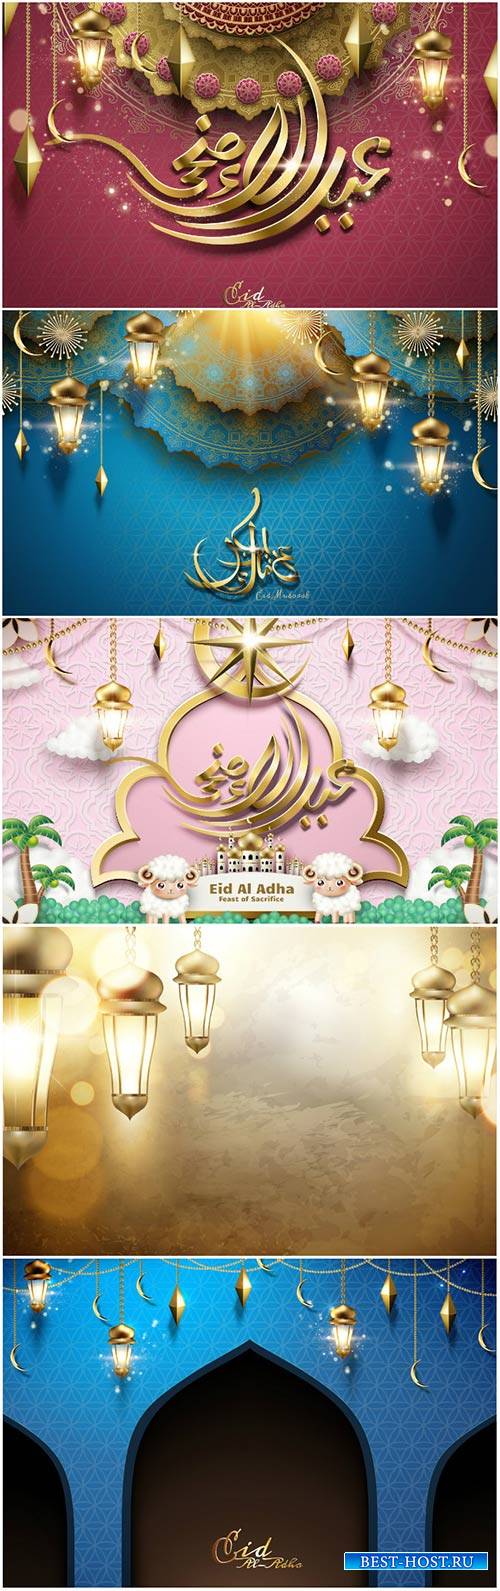 Eid Al Adha calligraphy vector design